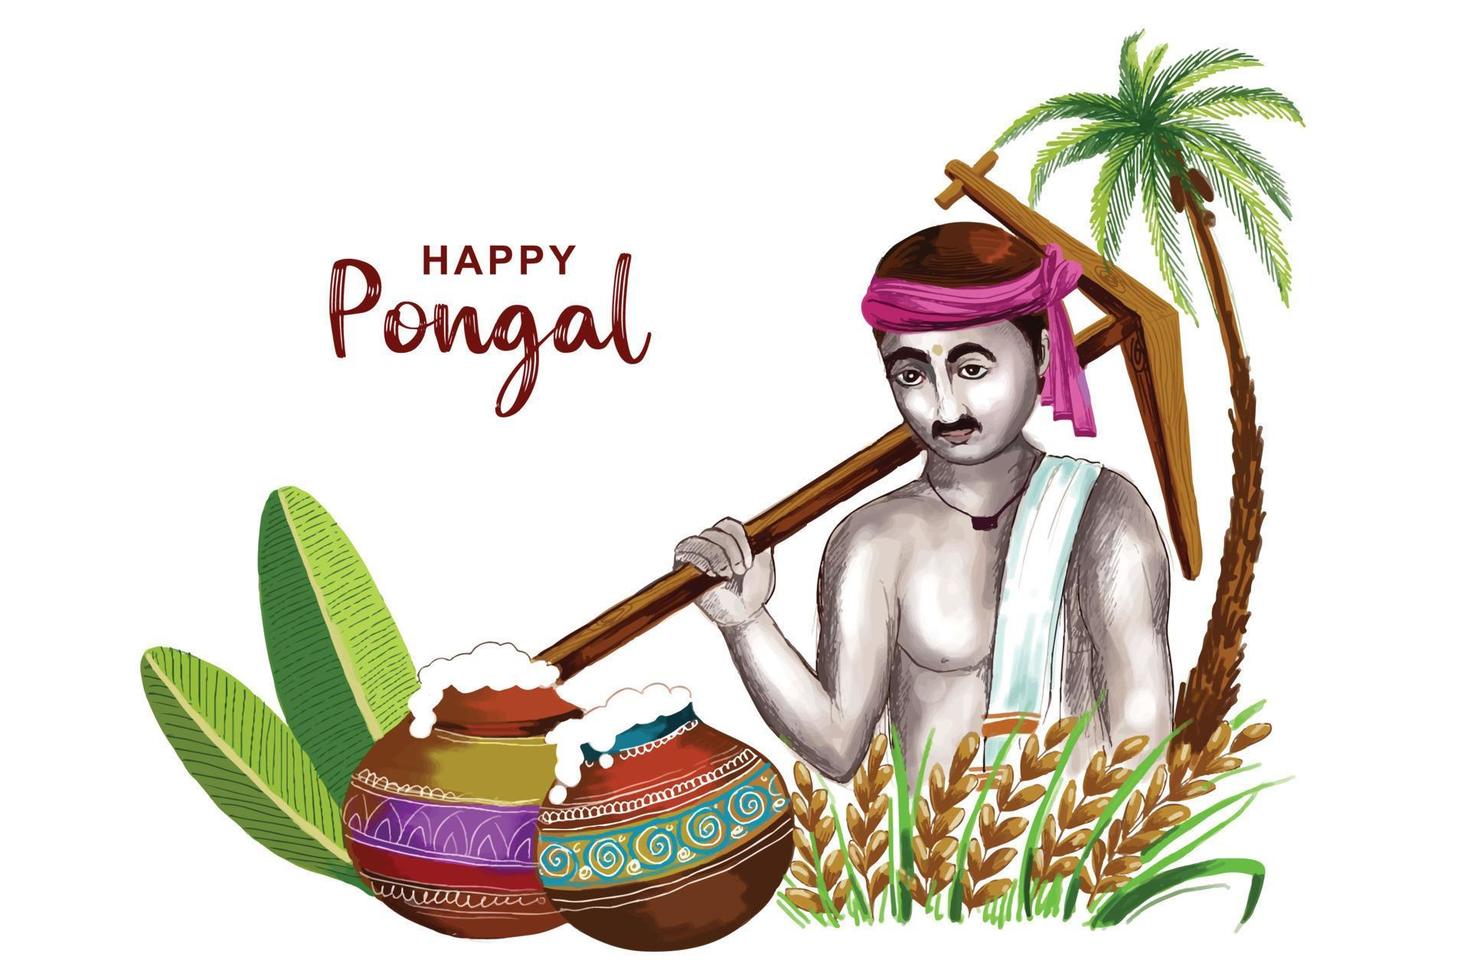 feliz festival pongal de tamil nadu sul da índia vetor